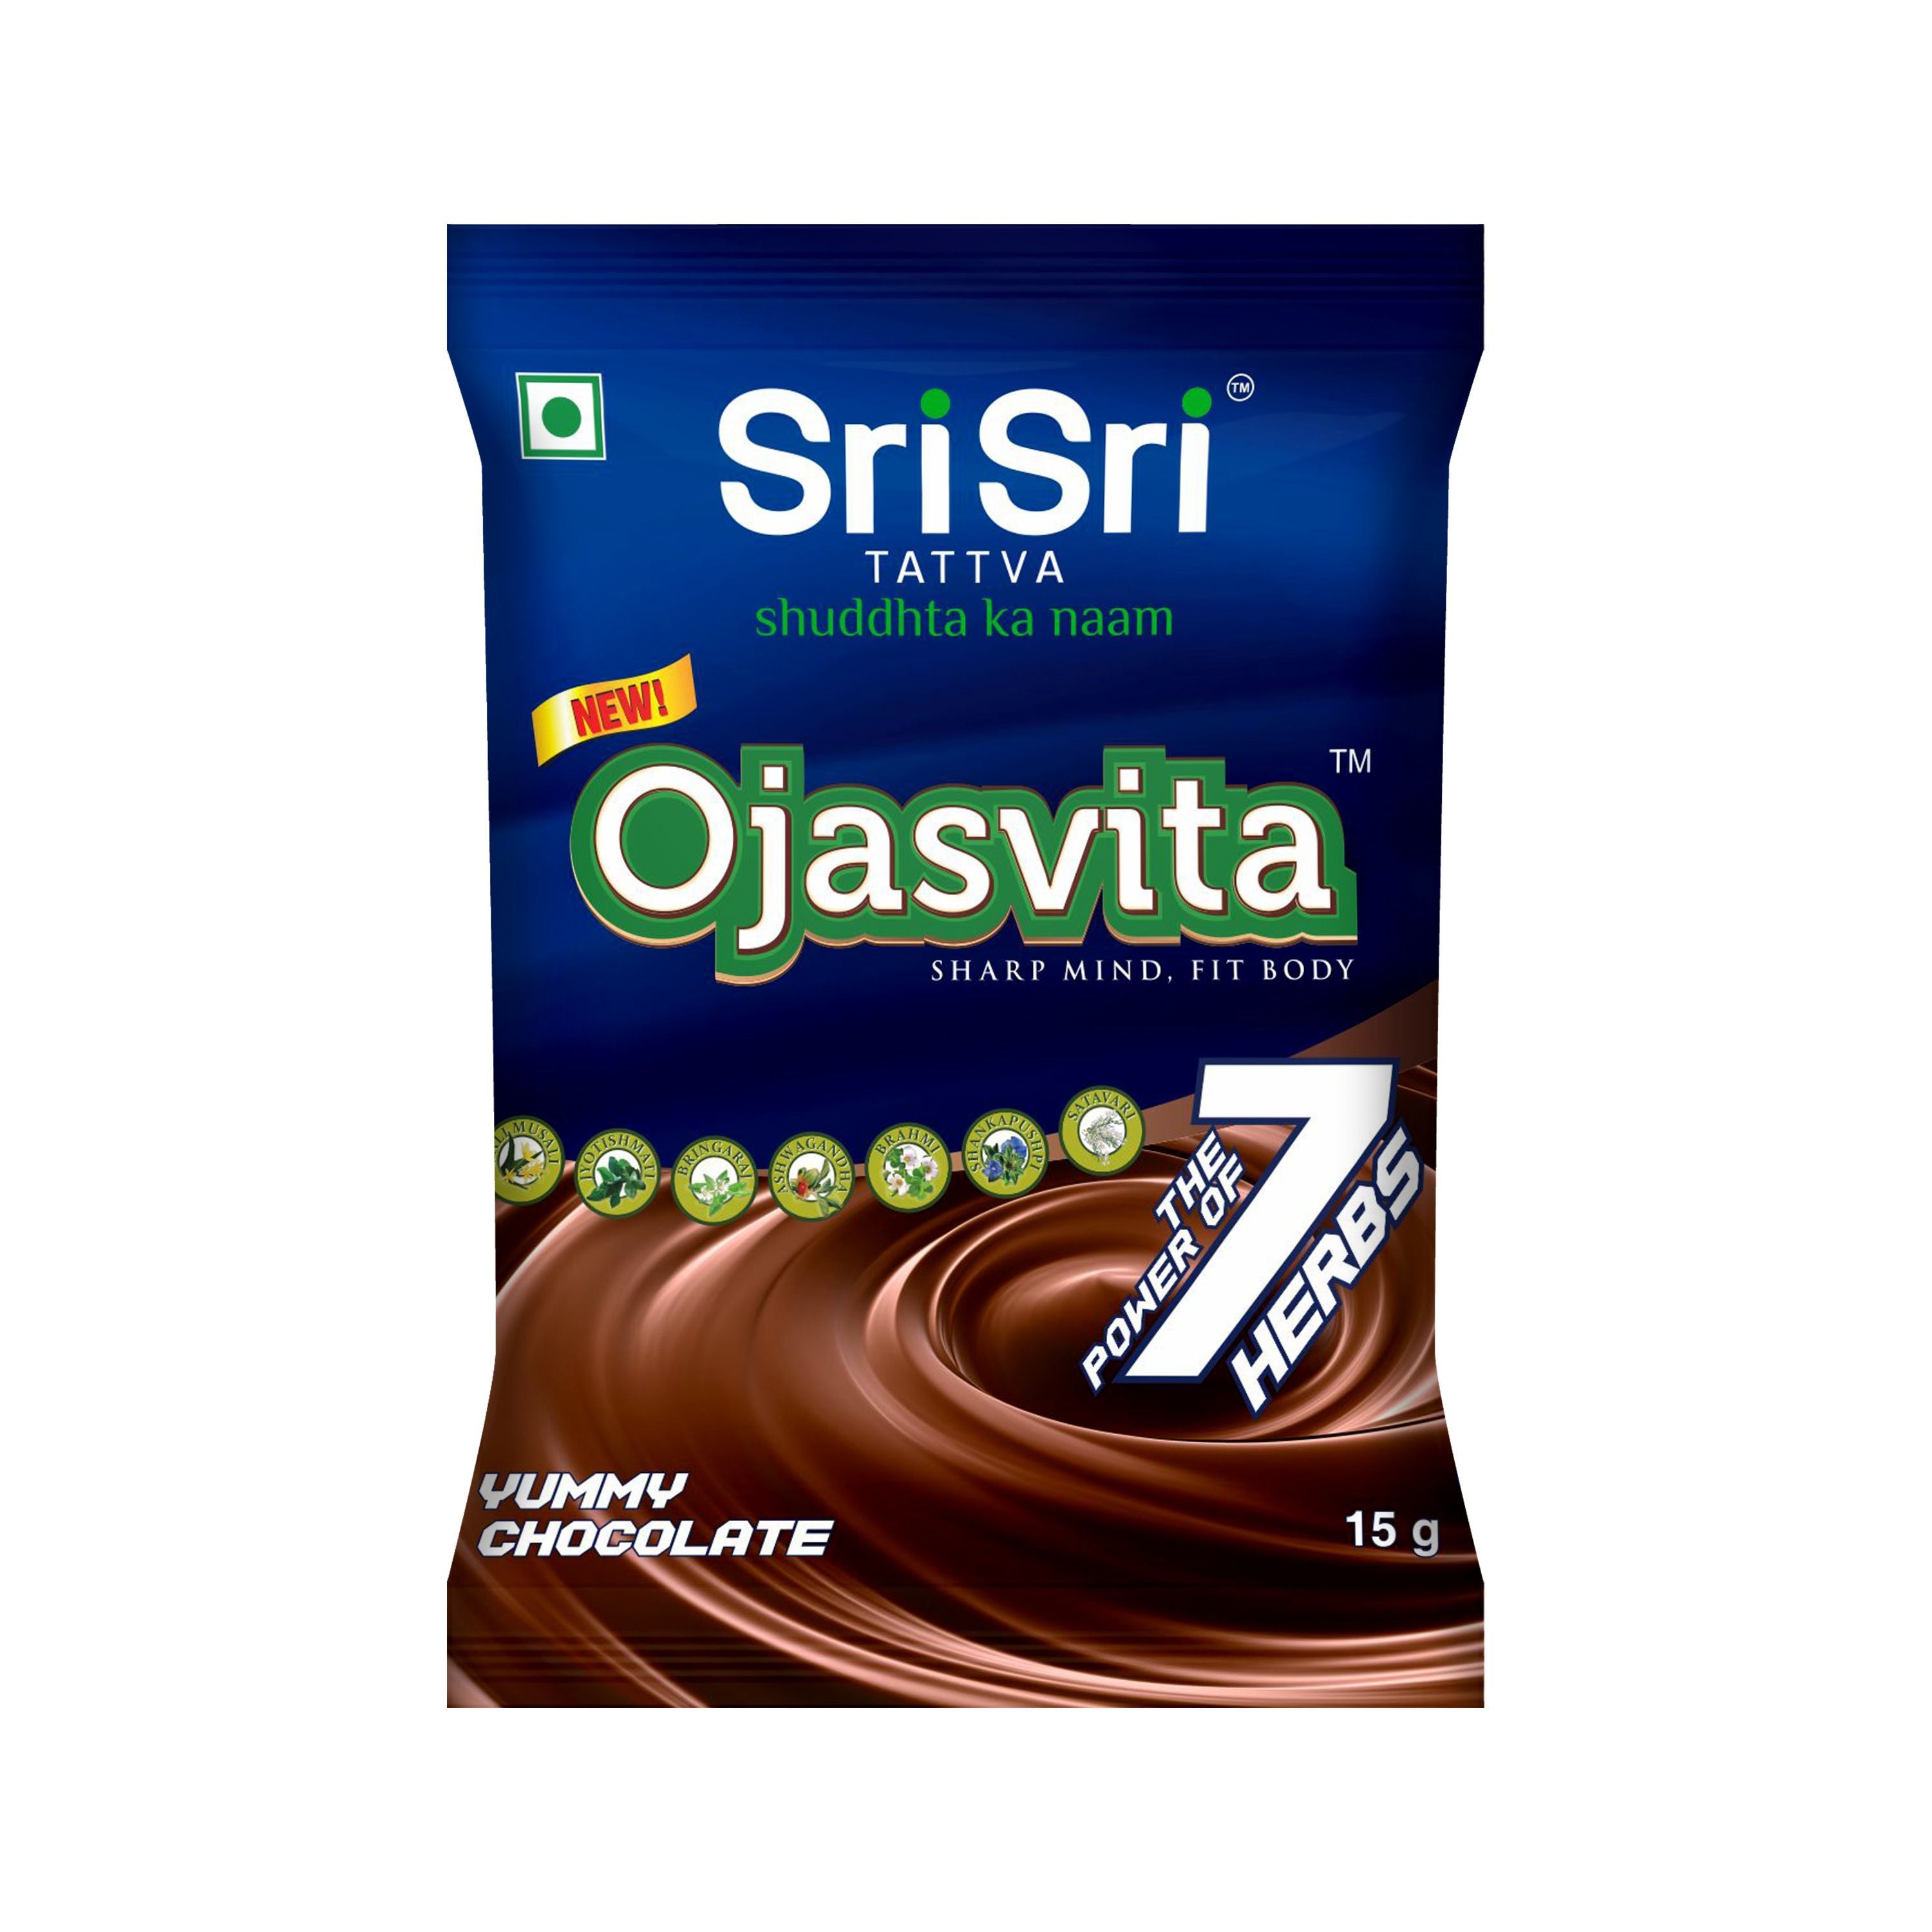 Chocolate Ojasvita - Sharp Mind & Fit Body, 15g - Sri Sri Tattva